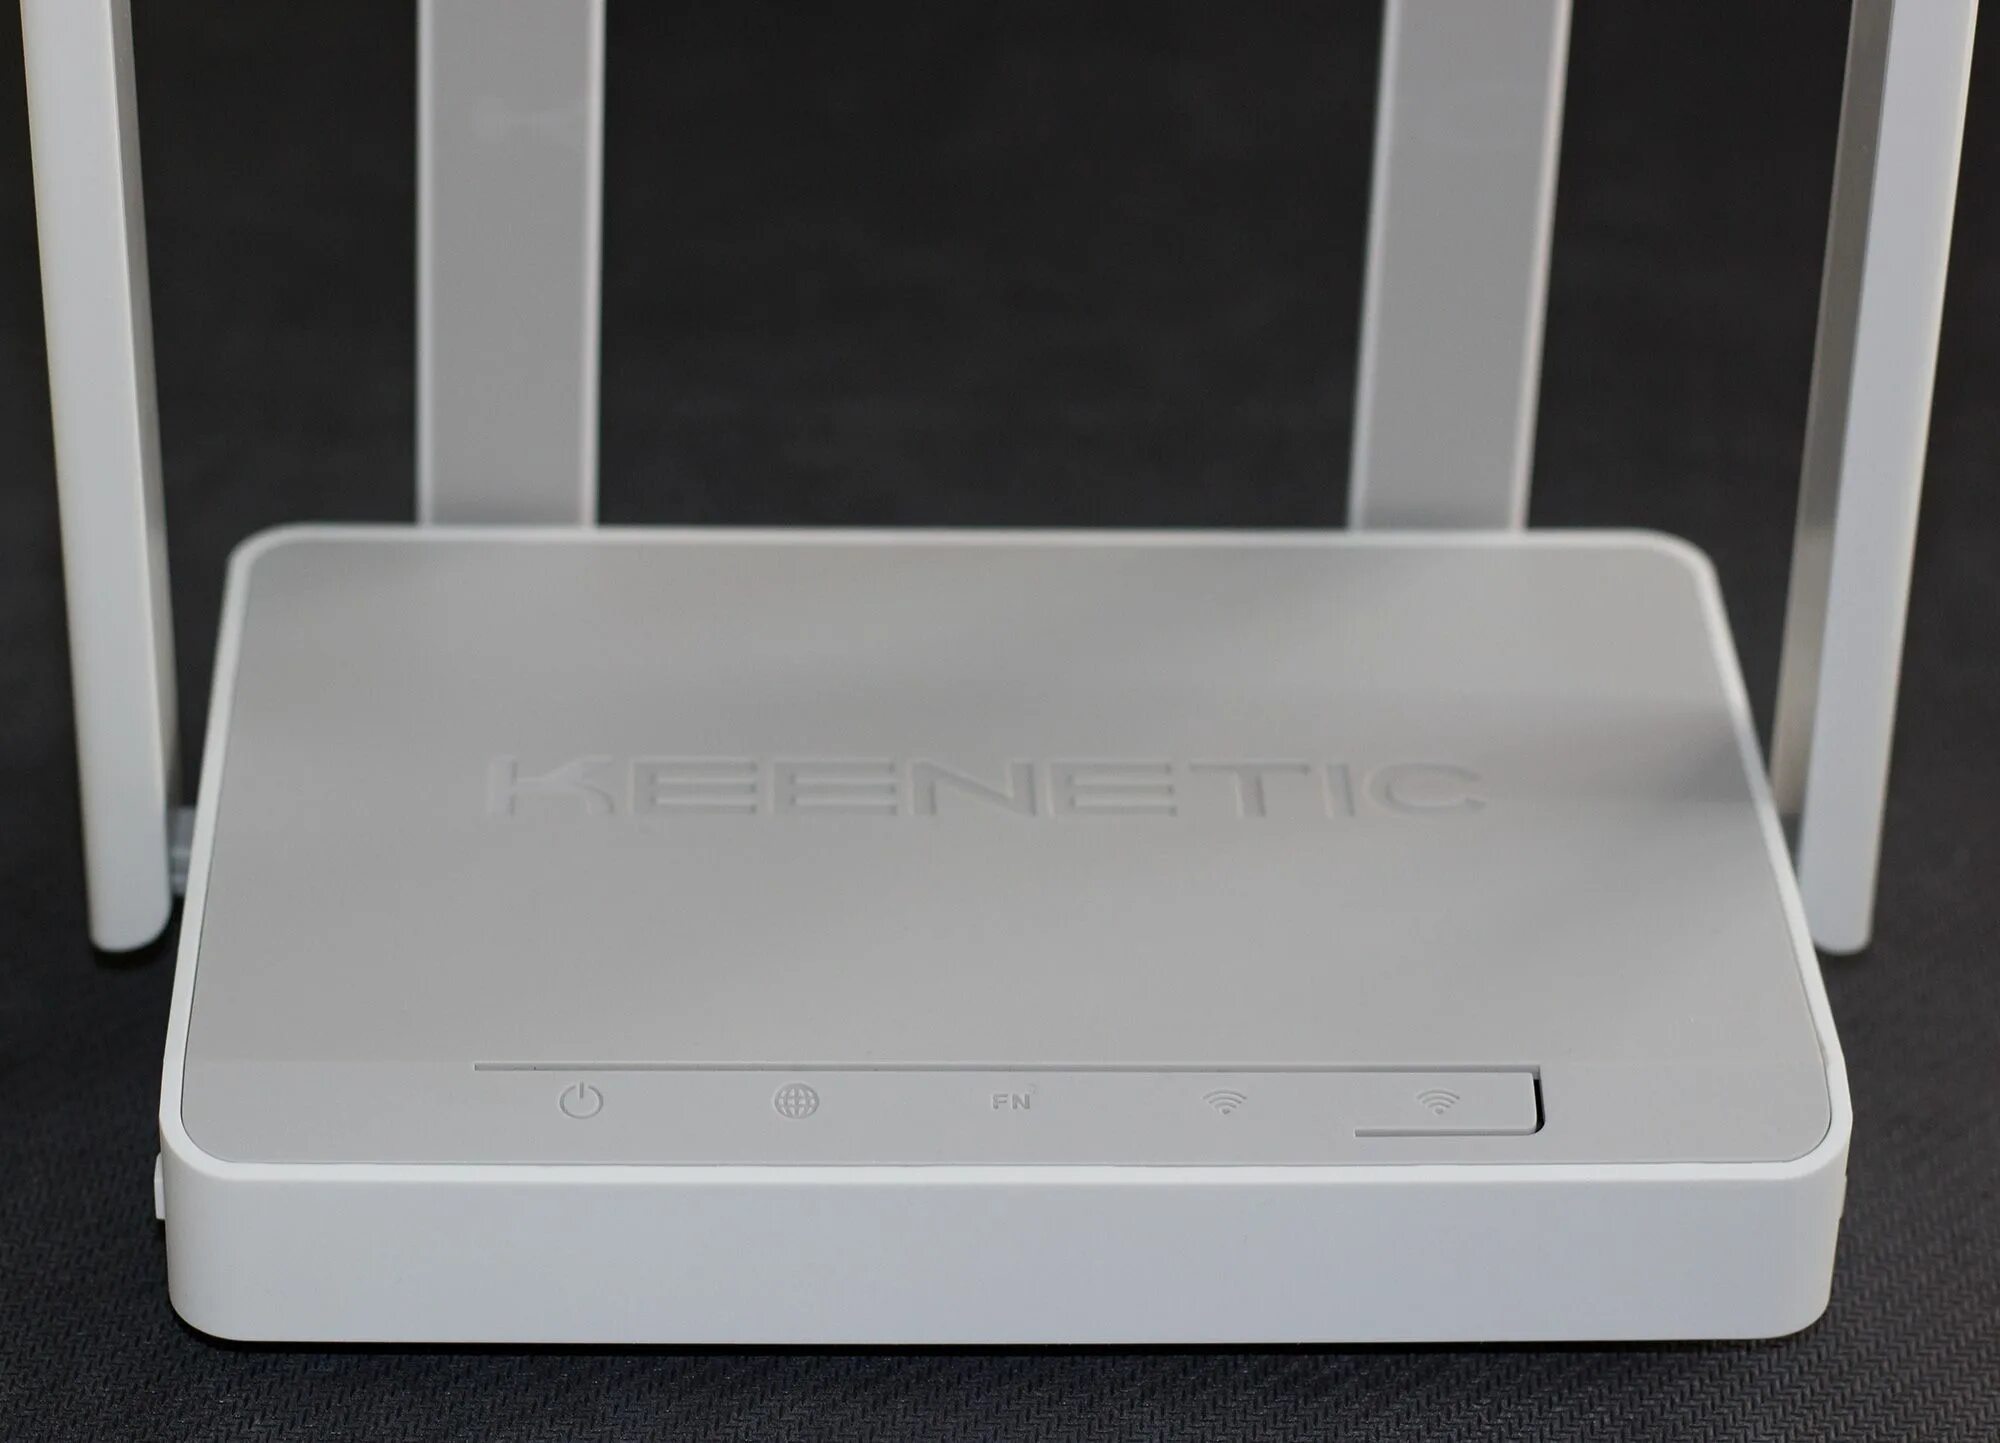 Viva kn 1910. Keenetic Viva 1910. Wi-Fi роутер Keenetic Viva. Маршрутизатор Keenetic Giga KN-1011. Keenetic Viva ac1300.